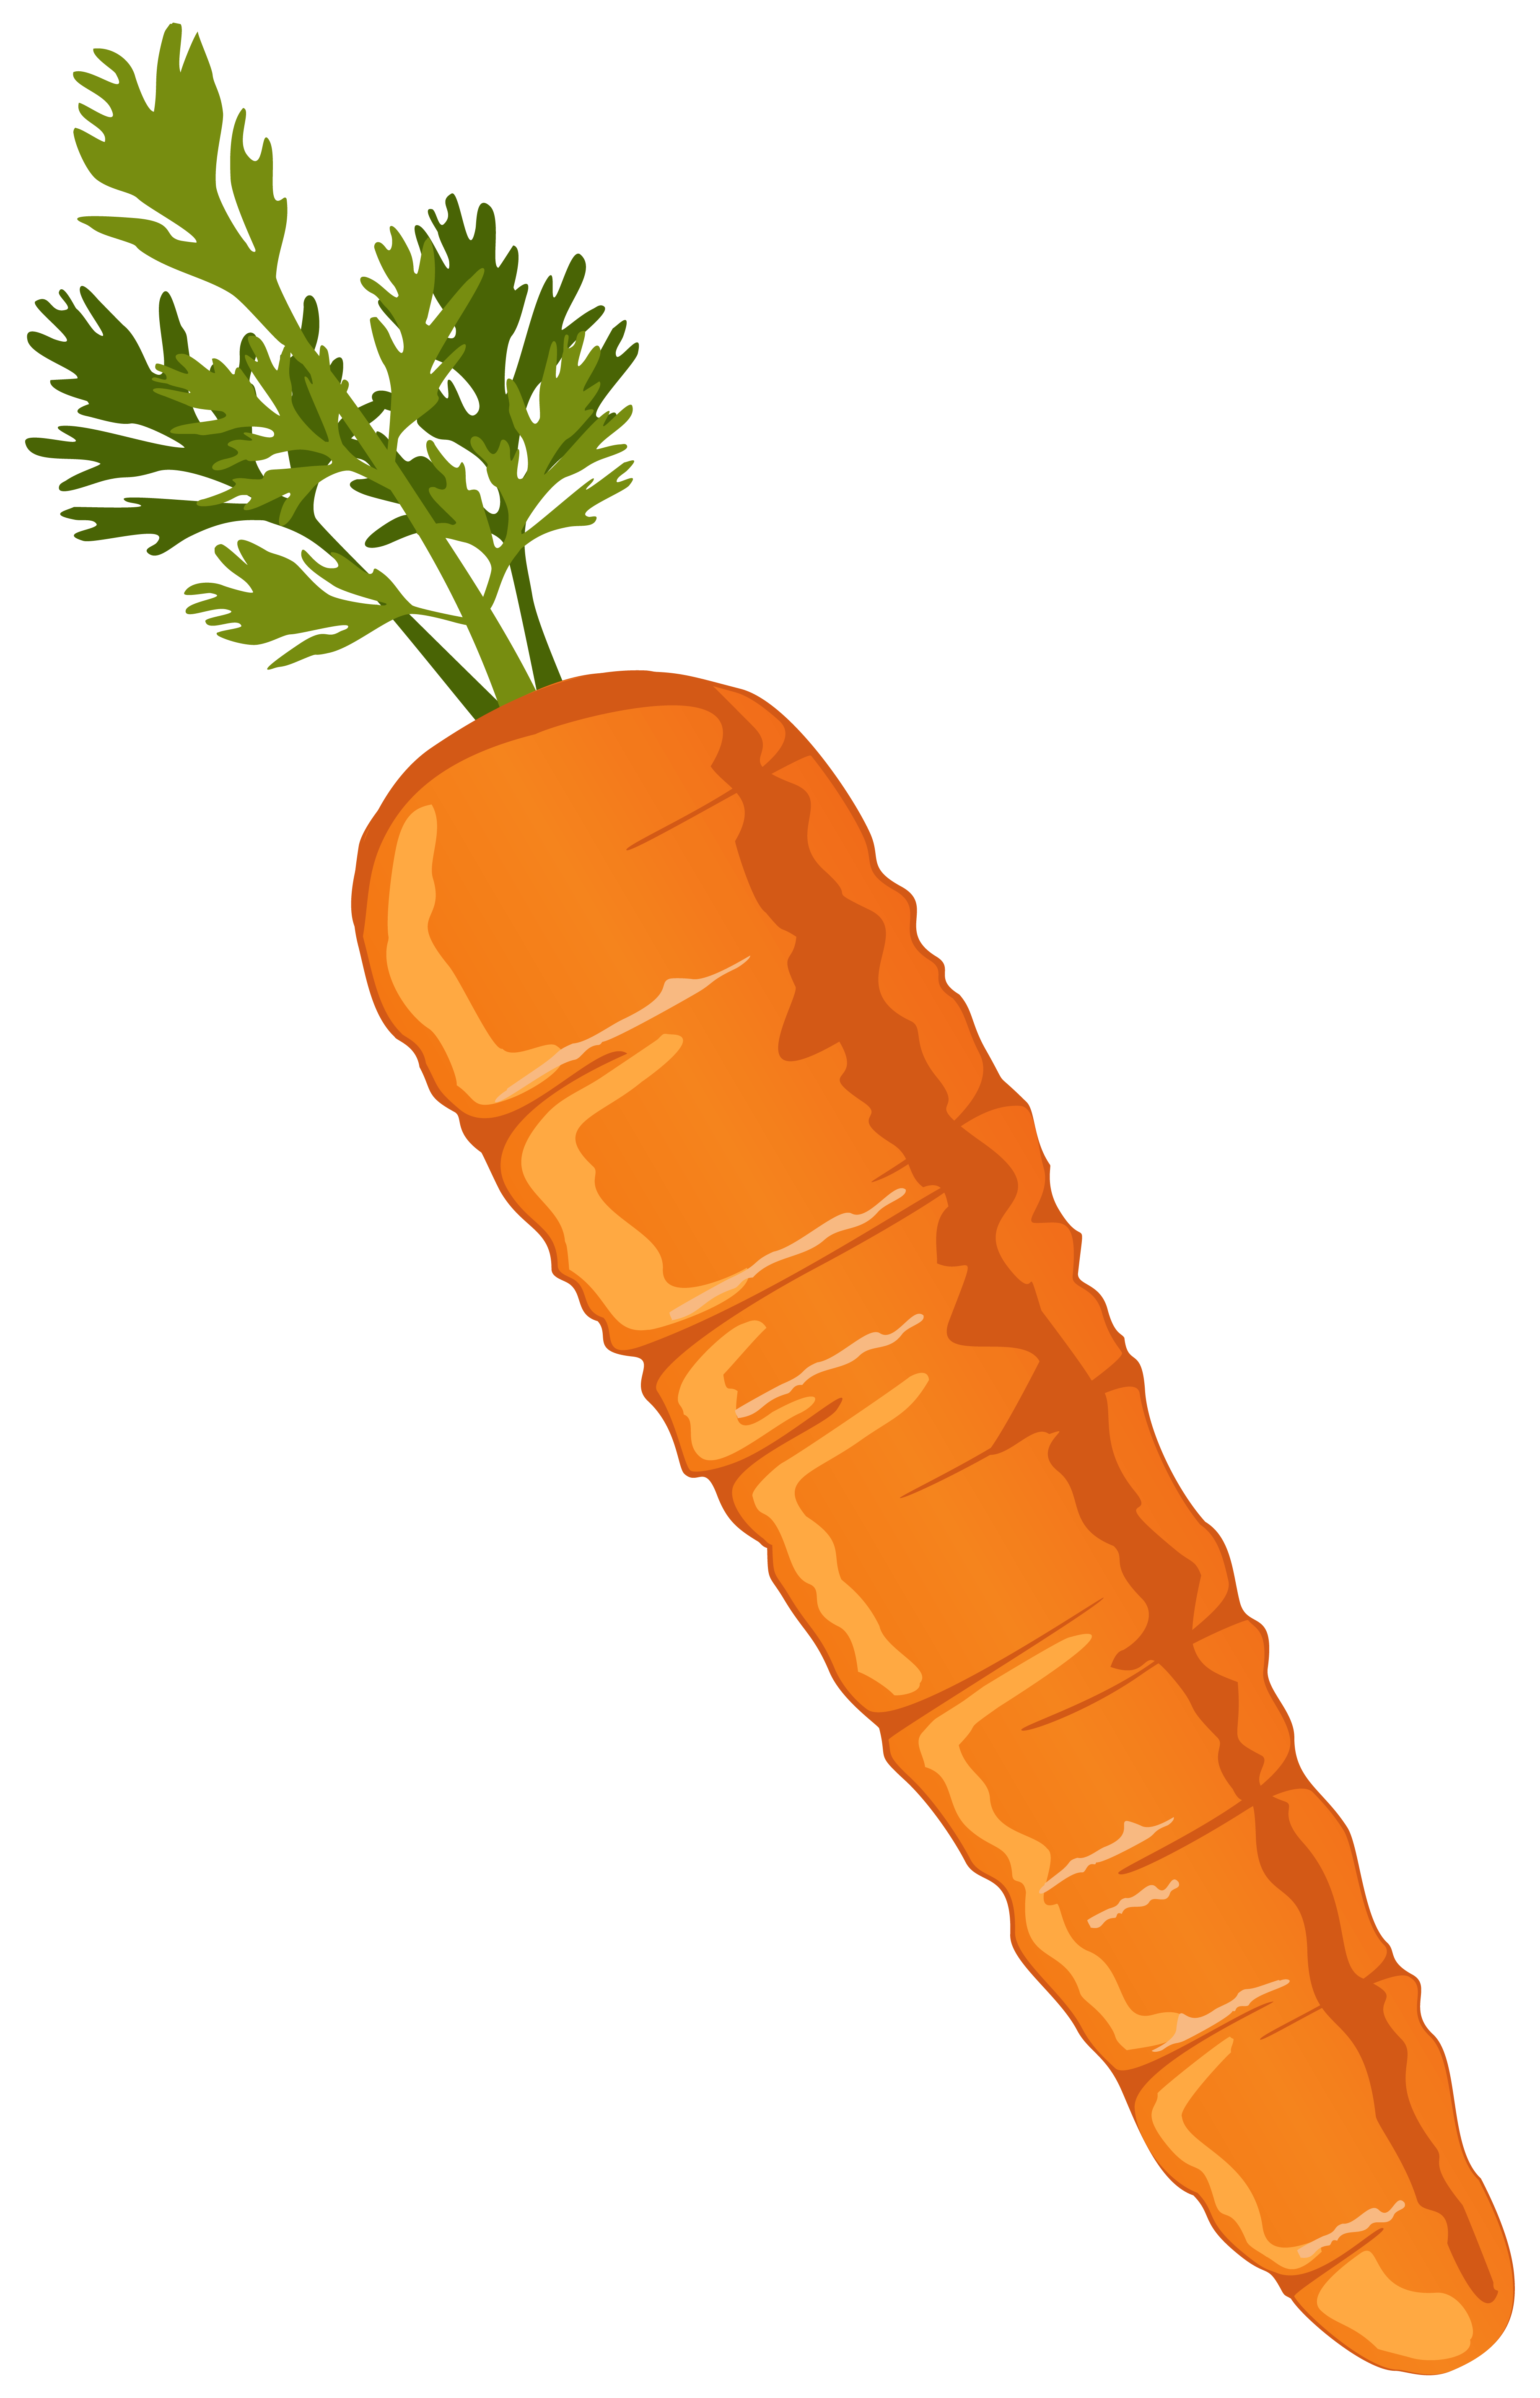 Carrot Clipart Wallpaper - Transparent Background Carrot Clipart , HD Wallpaper & Backgrounds